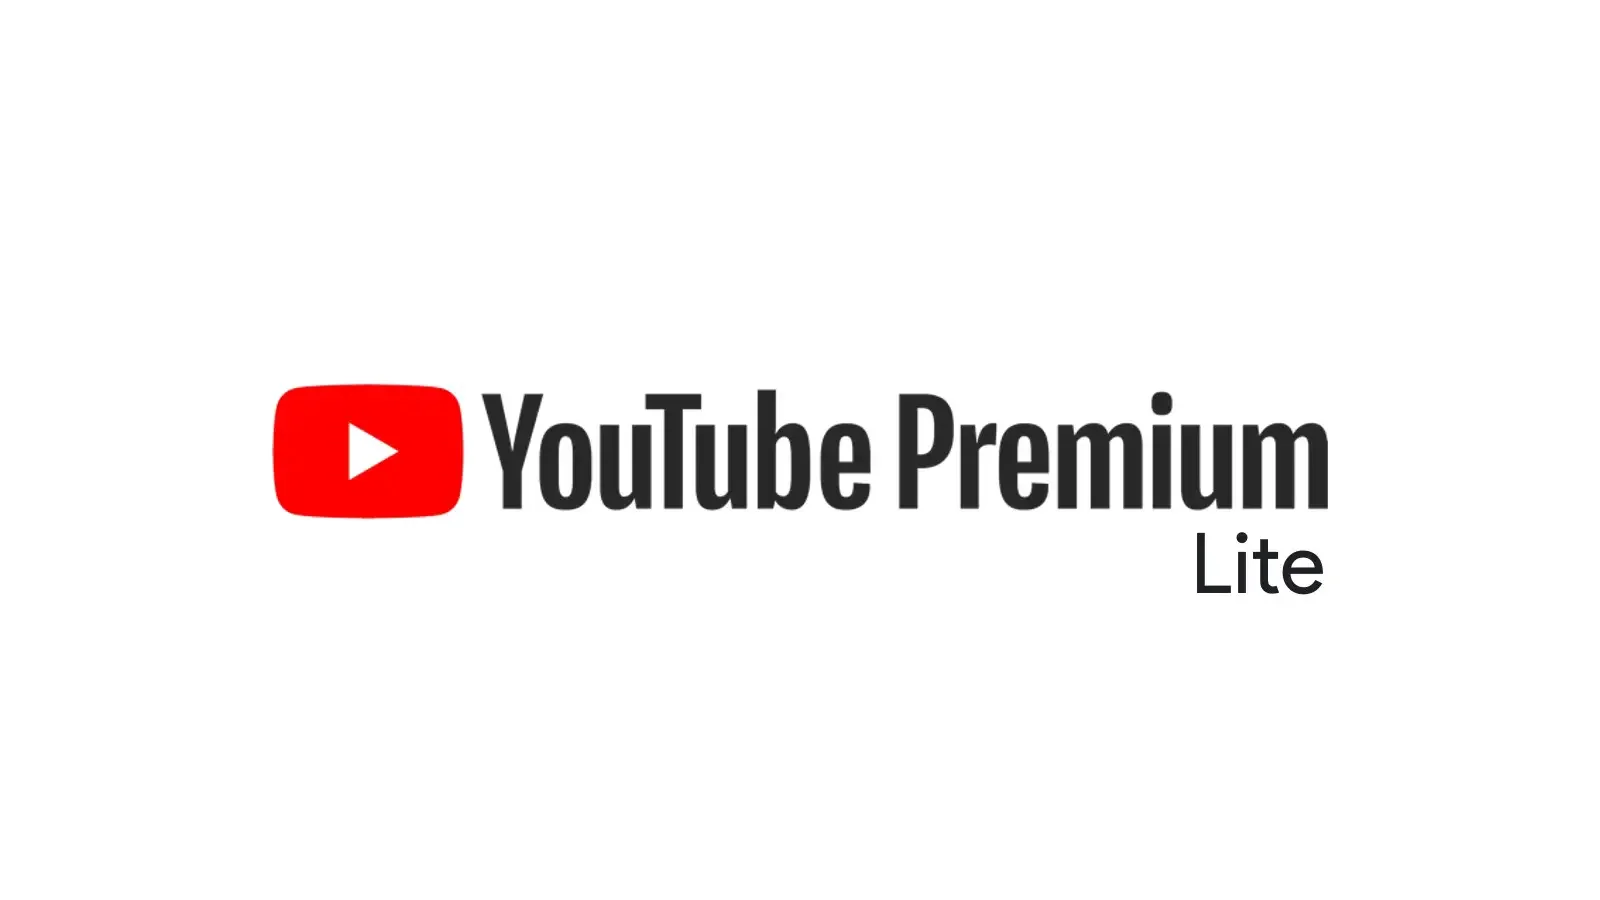 YouTube Lite Mod Apk V18.12.33 (Premium Unlocked)